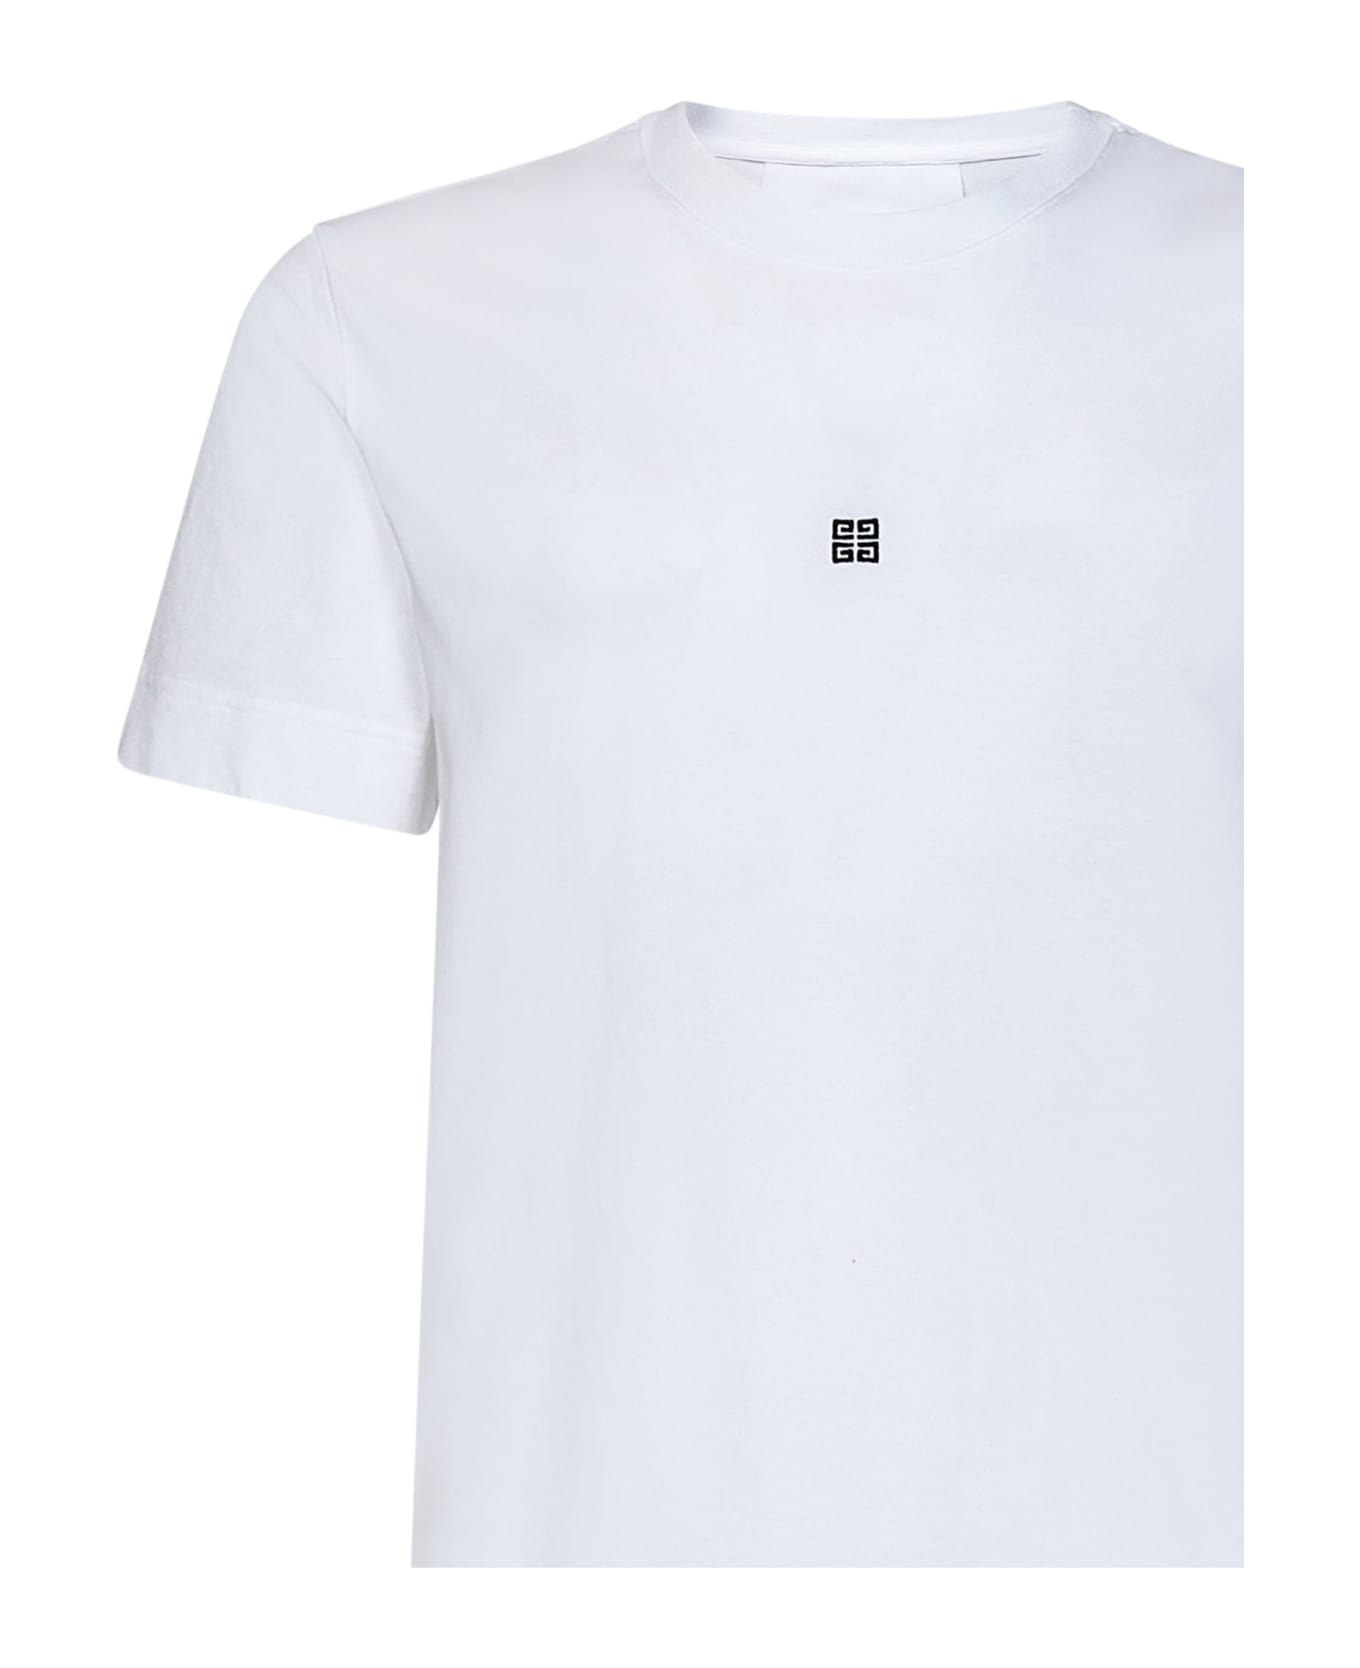 Givenchy Cotton T-shirt - WHITE シャツ